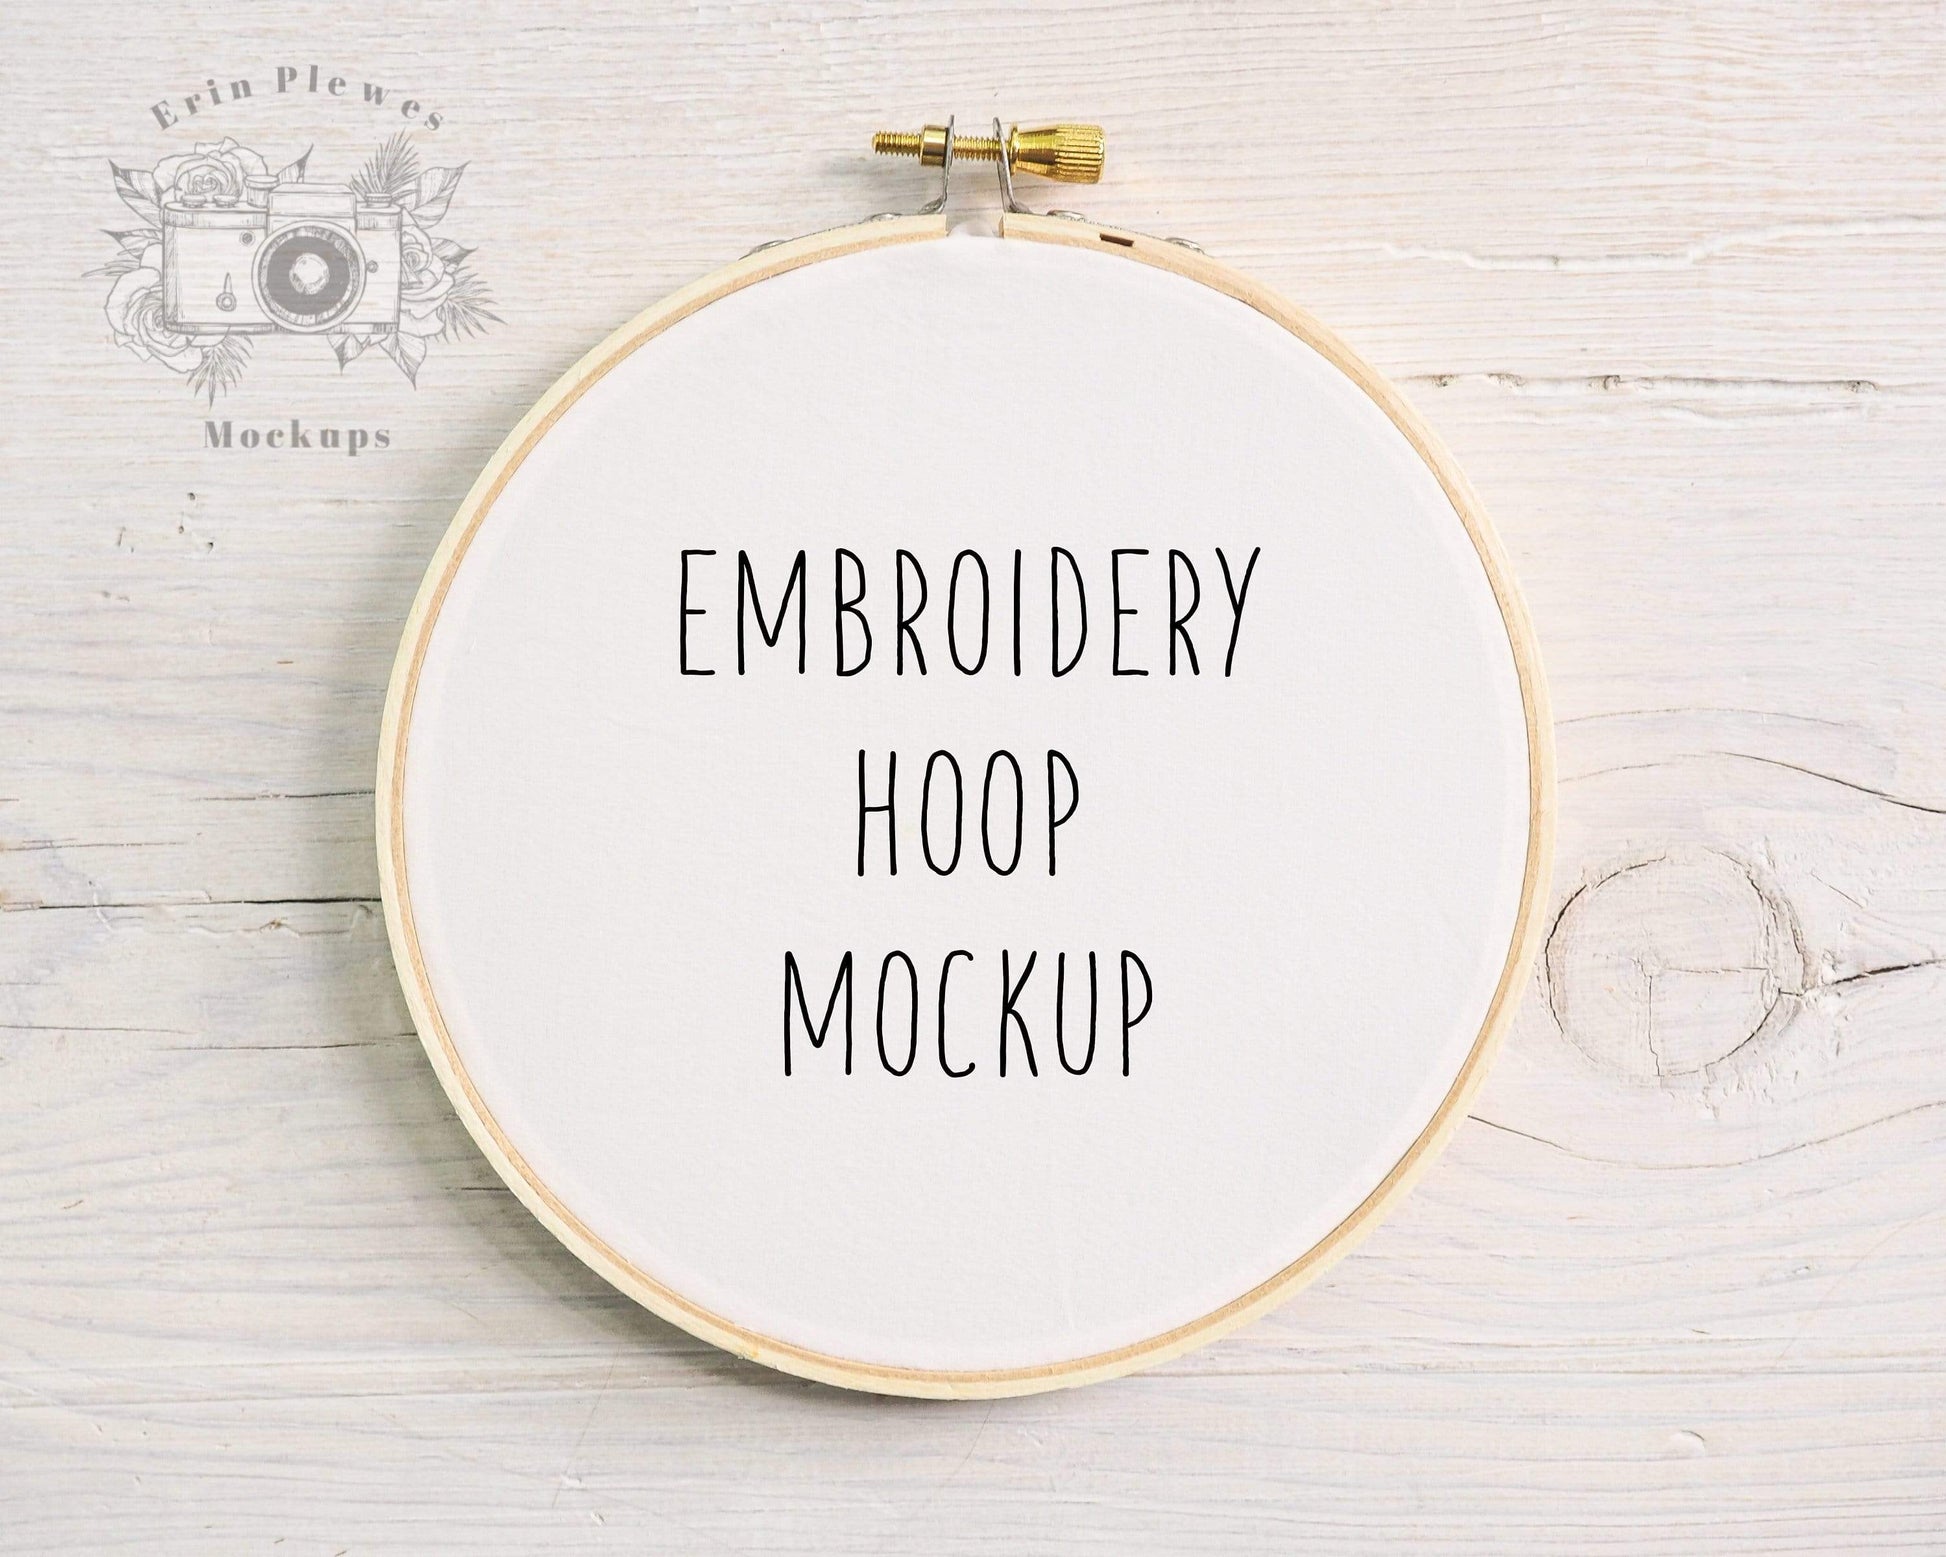 Erin Plewes Mockups Cross Stitch Mockup, Embroidery hoop mockup on rustic white wood,  Sewing Mock-up JPG Digital Download Template